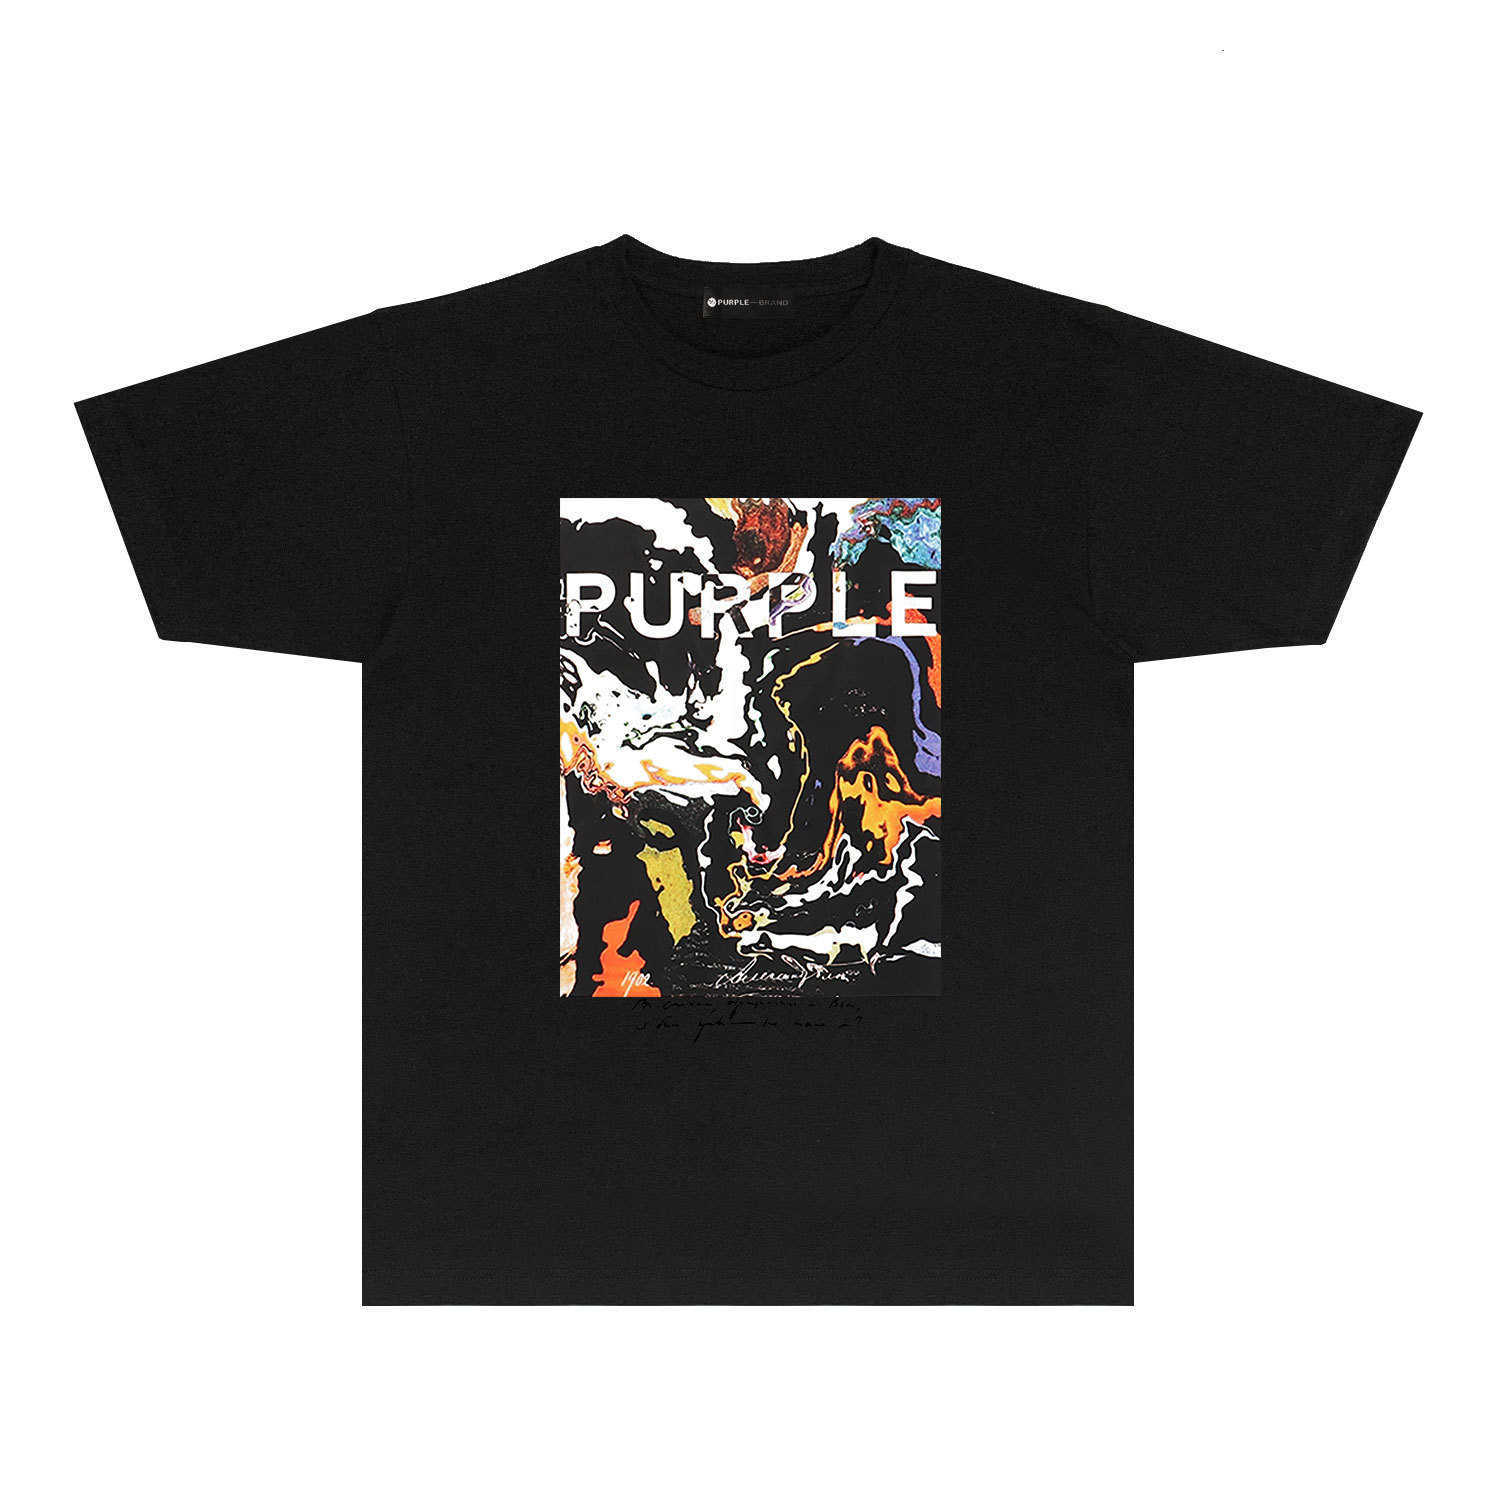 Долгосрочная модная брендовая футболка PURPLE BRAND T SHIRT с короткими рукавами NYW6